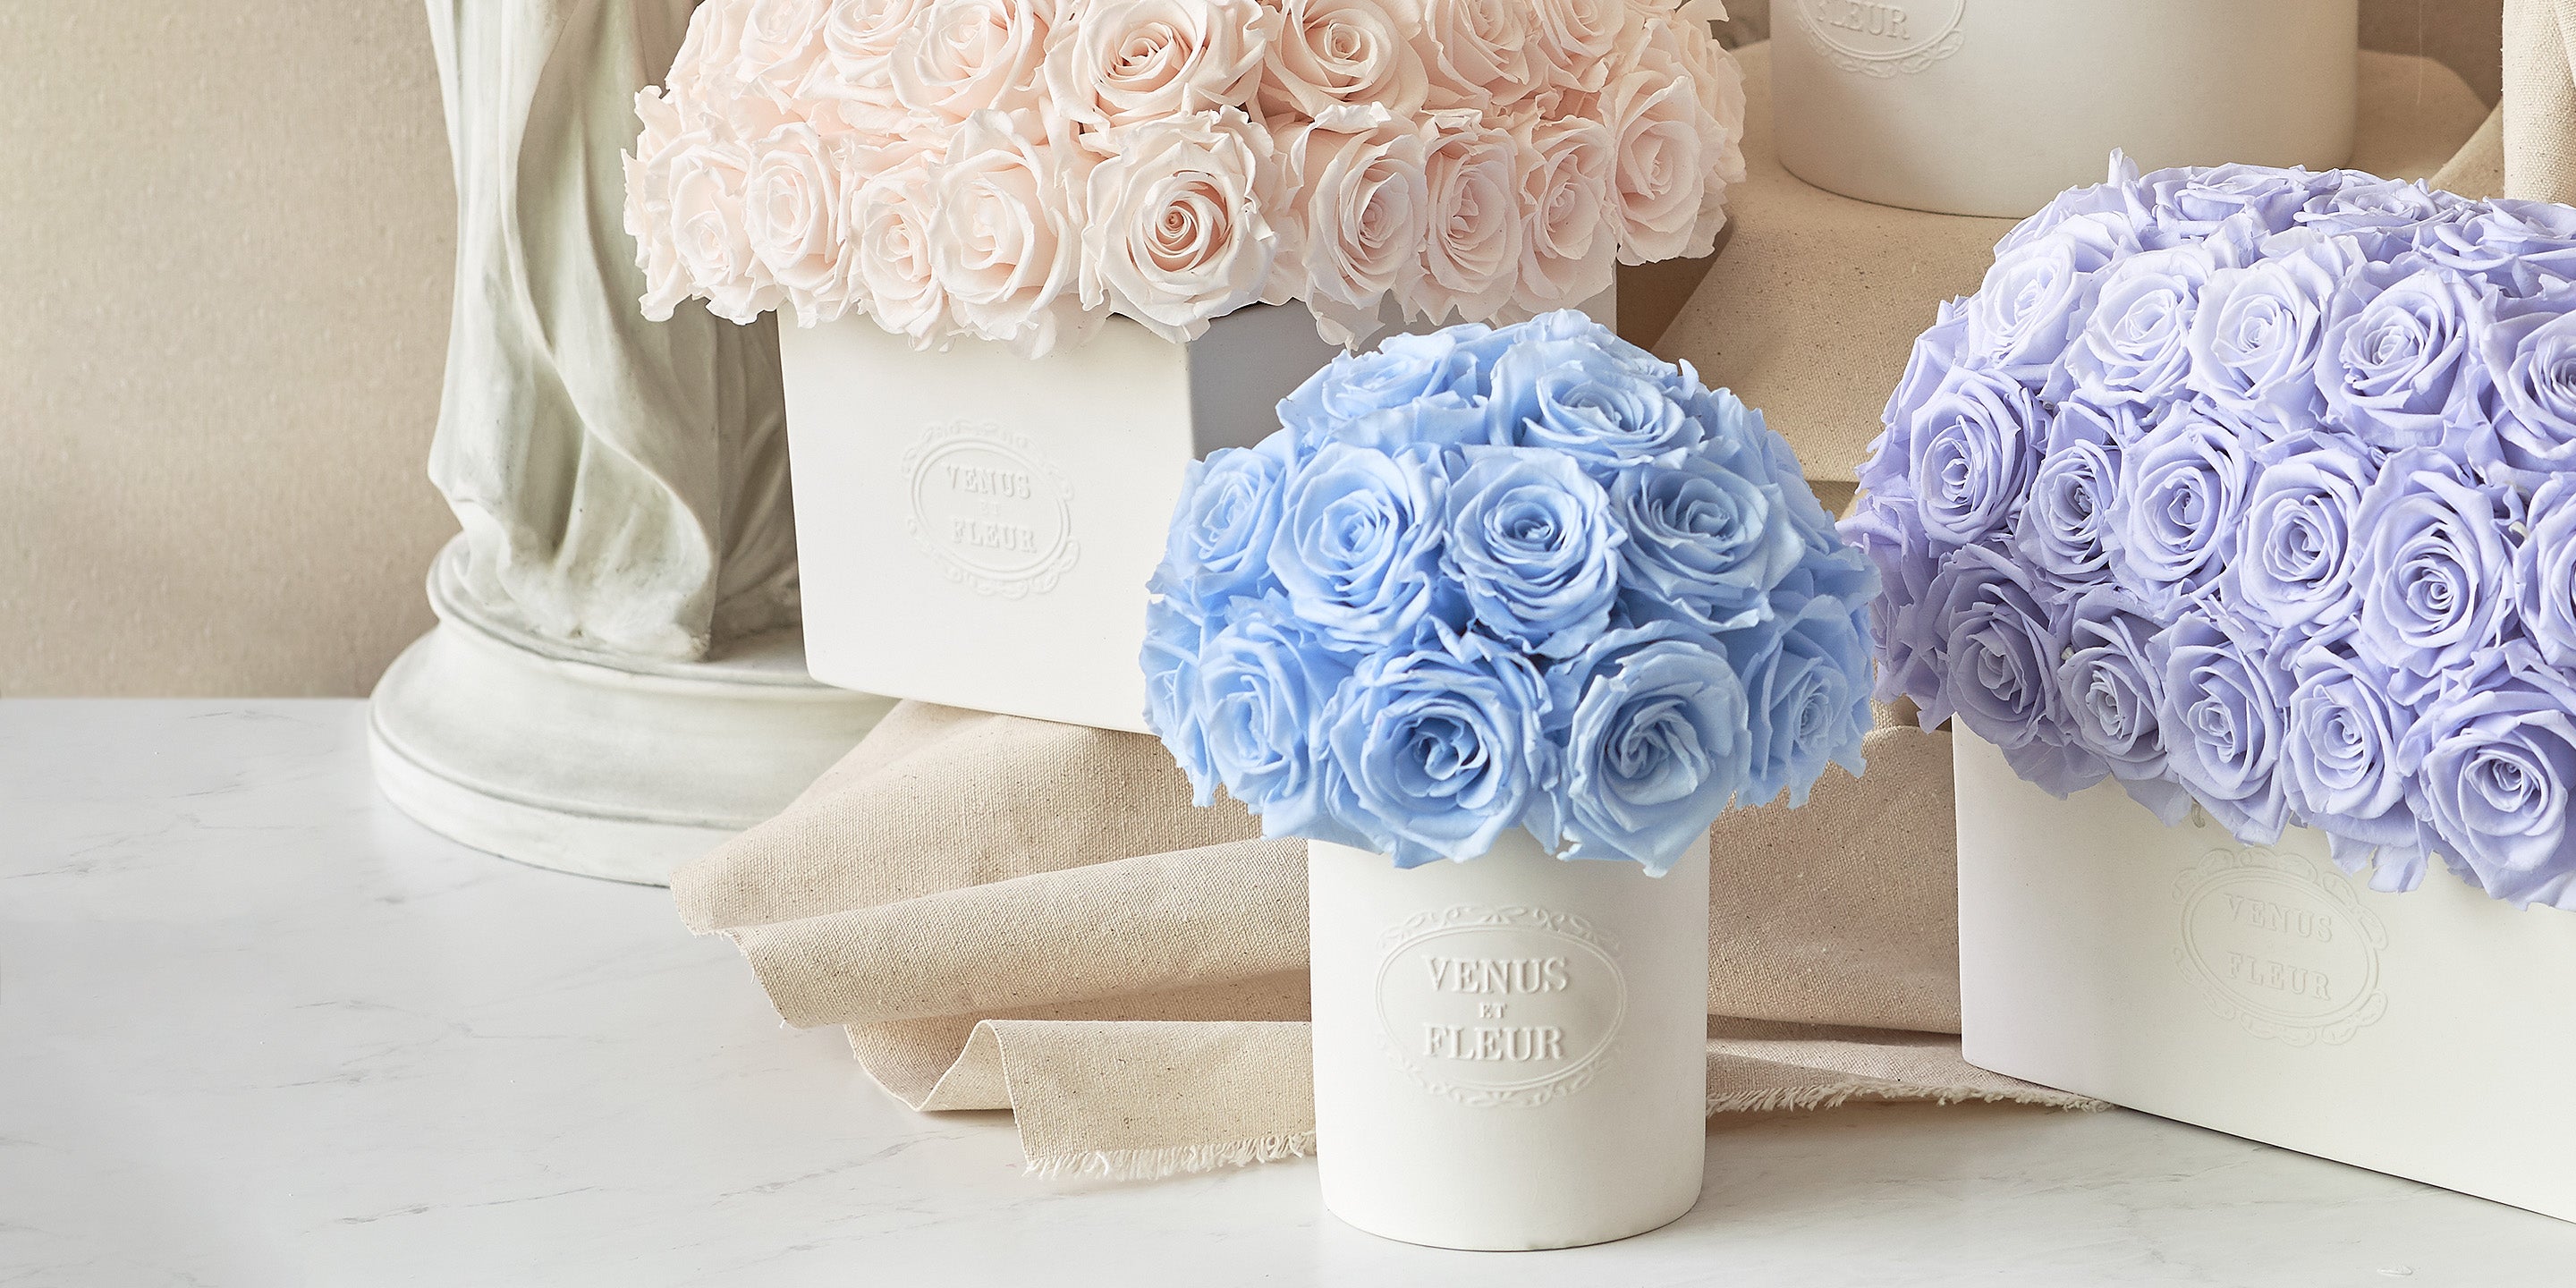 Blush Blue Purple Eternity Roses in White Vases Venus et Fleur